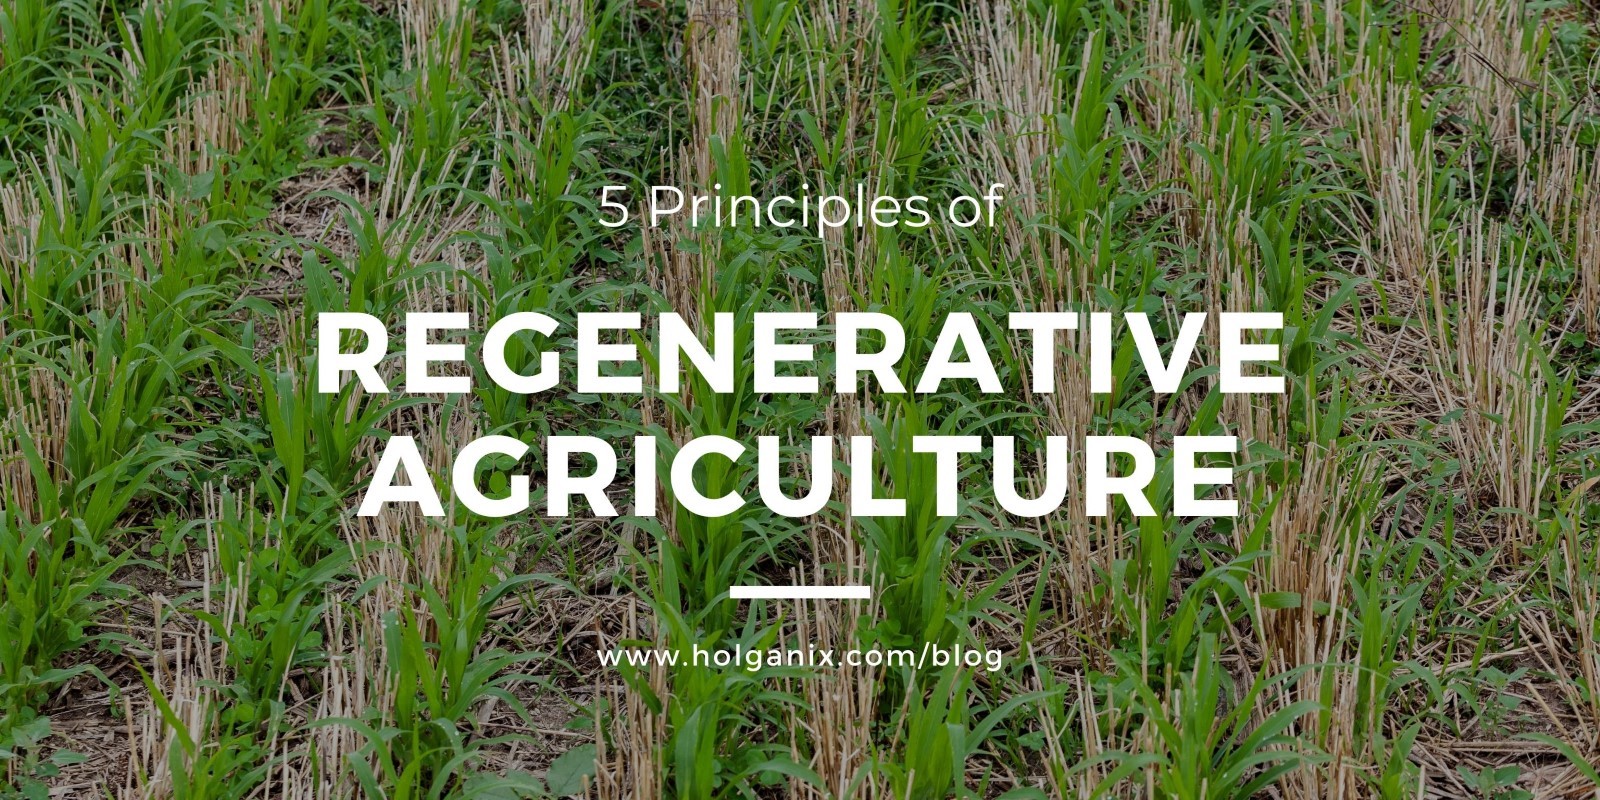 5 Principles of Regenerative Agriculture